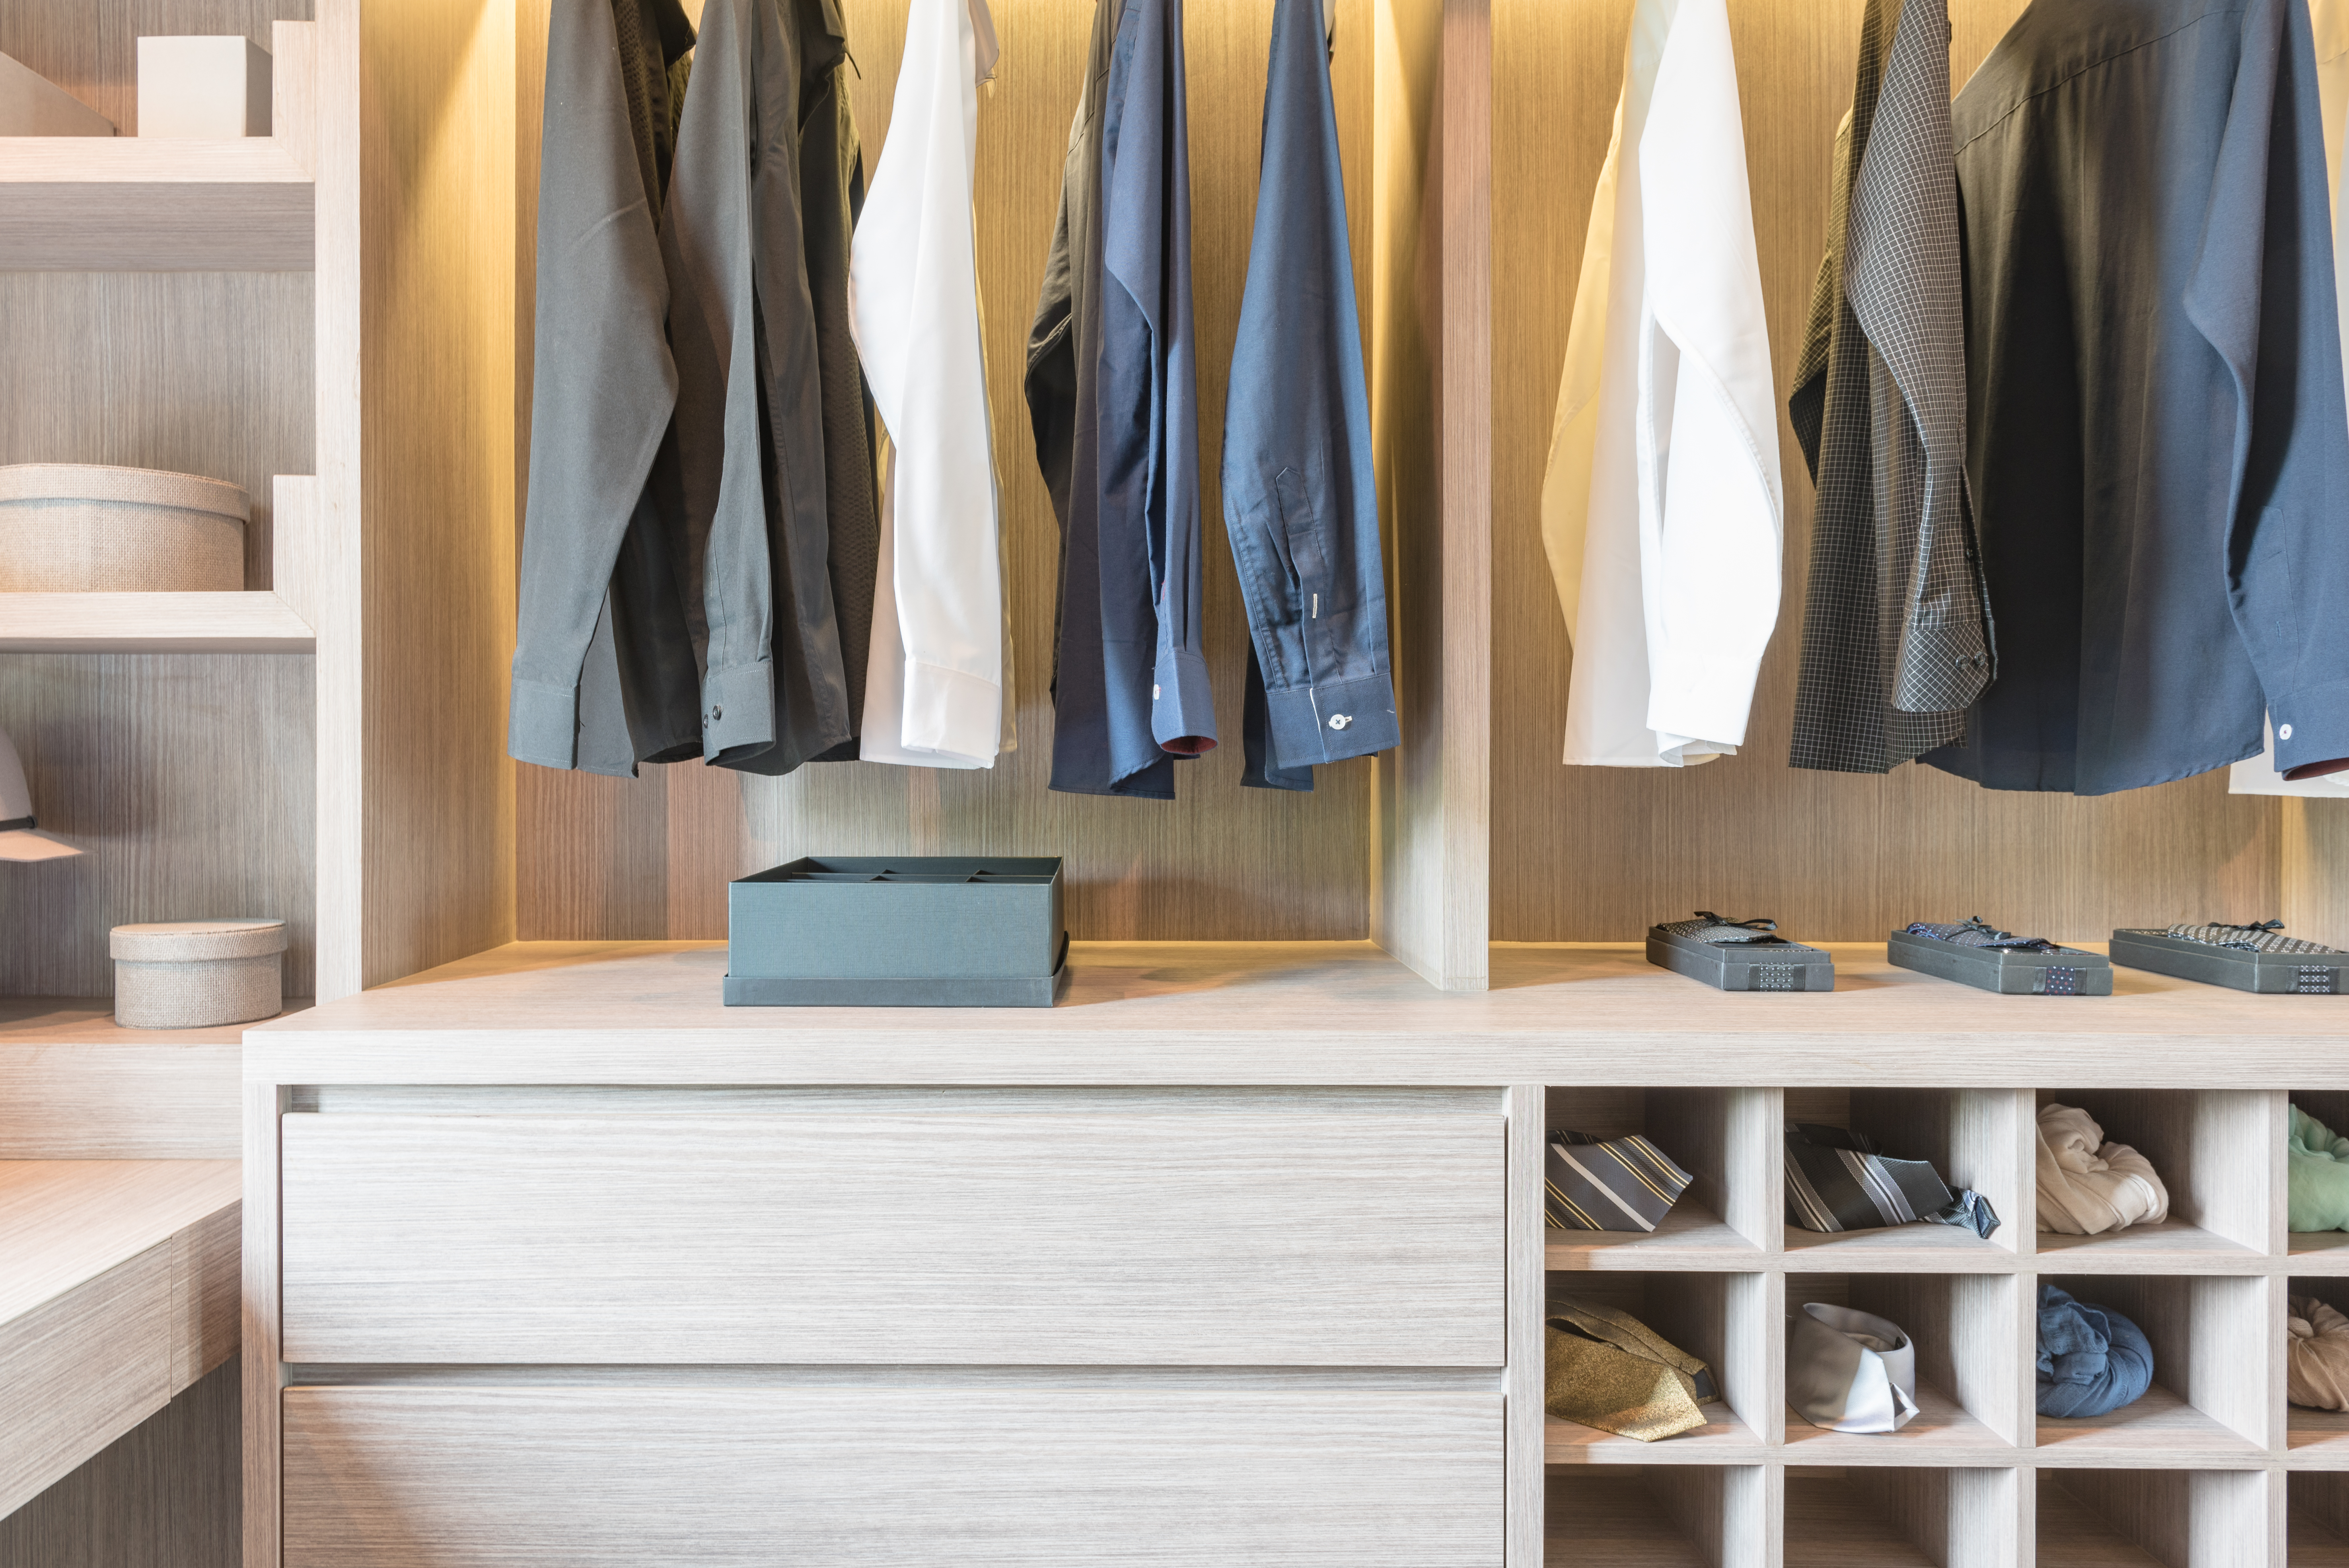 Innovative Closet Designs provides a wide range of organizational solutions